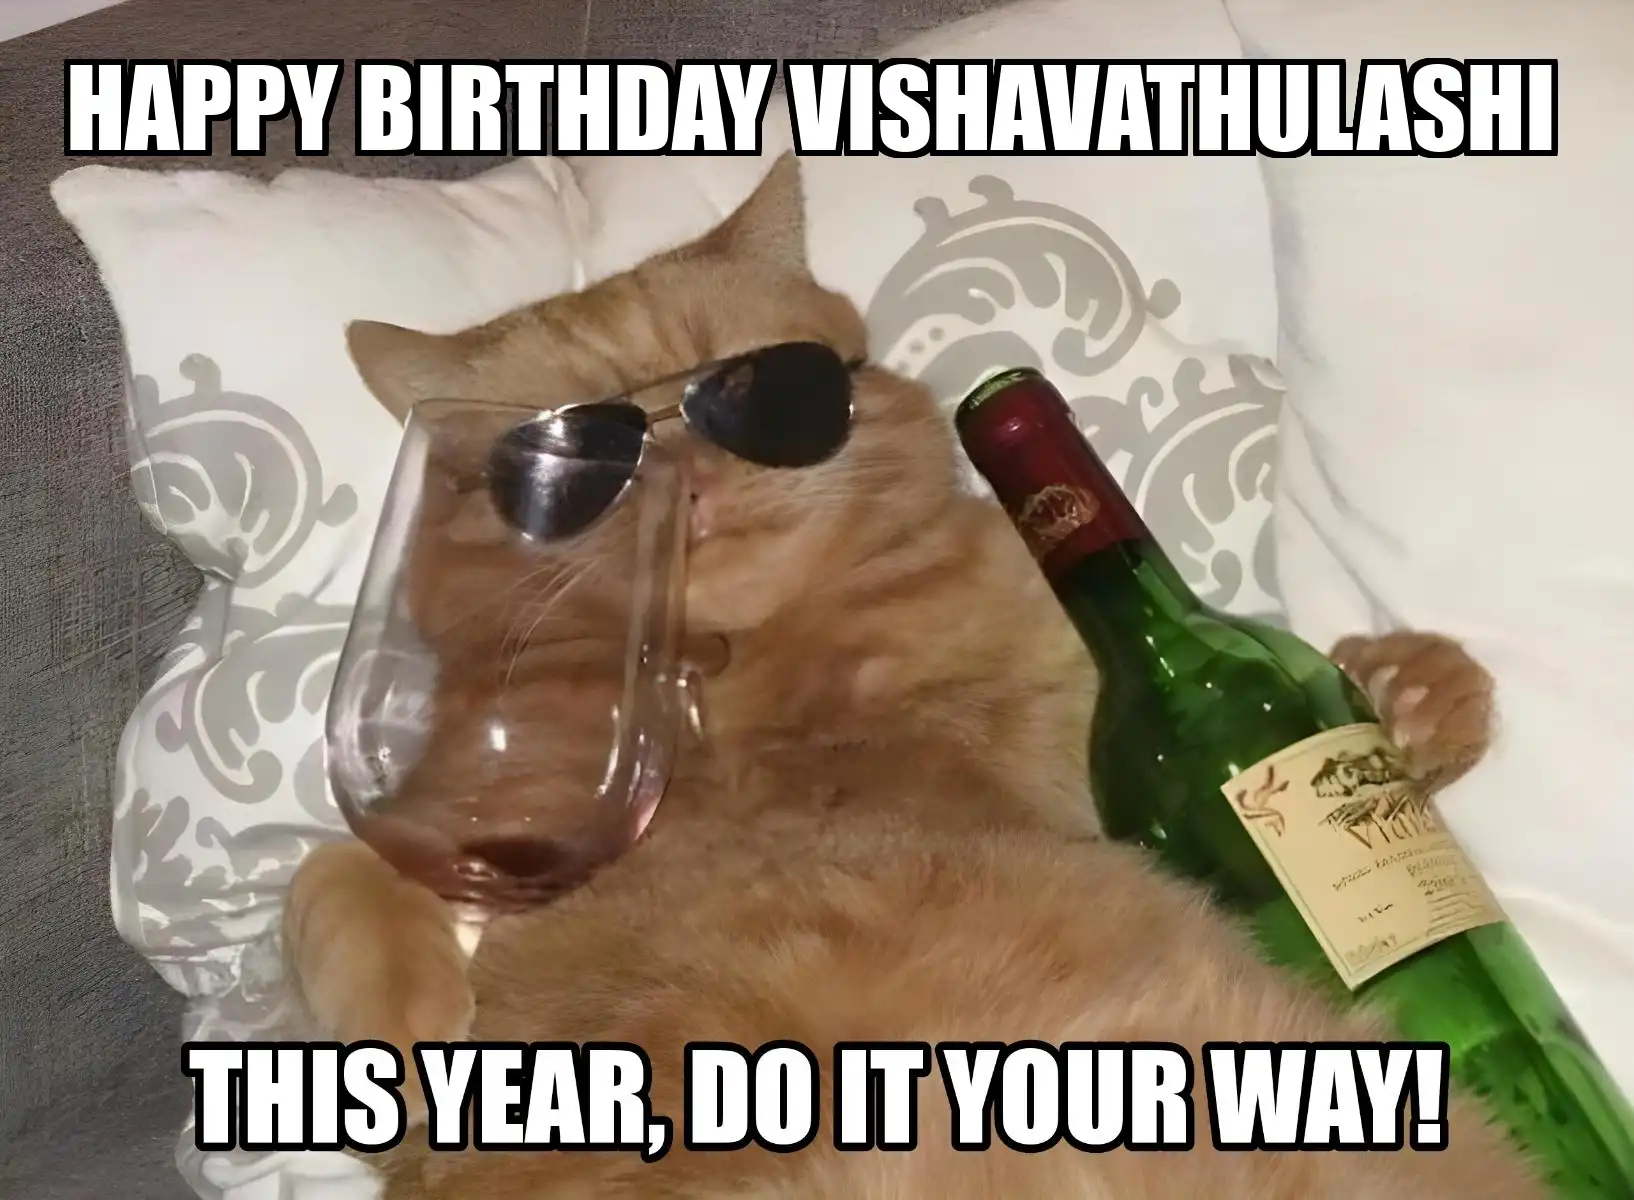 Happy Birthday Vishavathulashi This Year Do It Your Way Meme